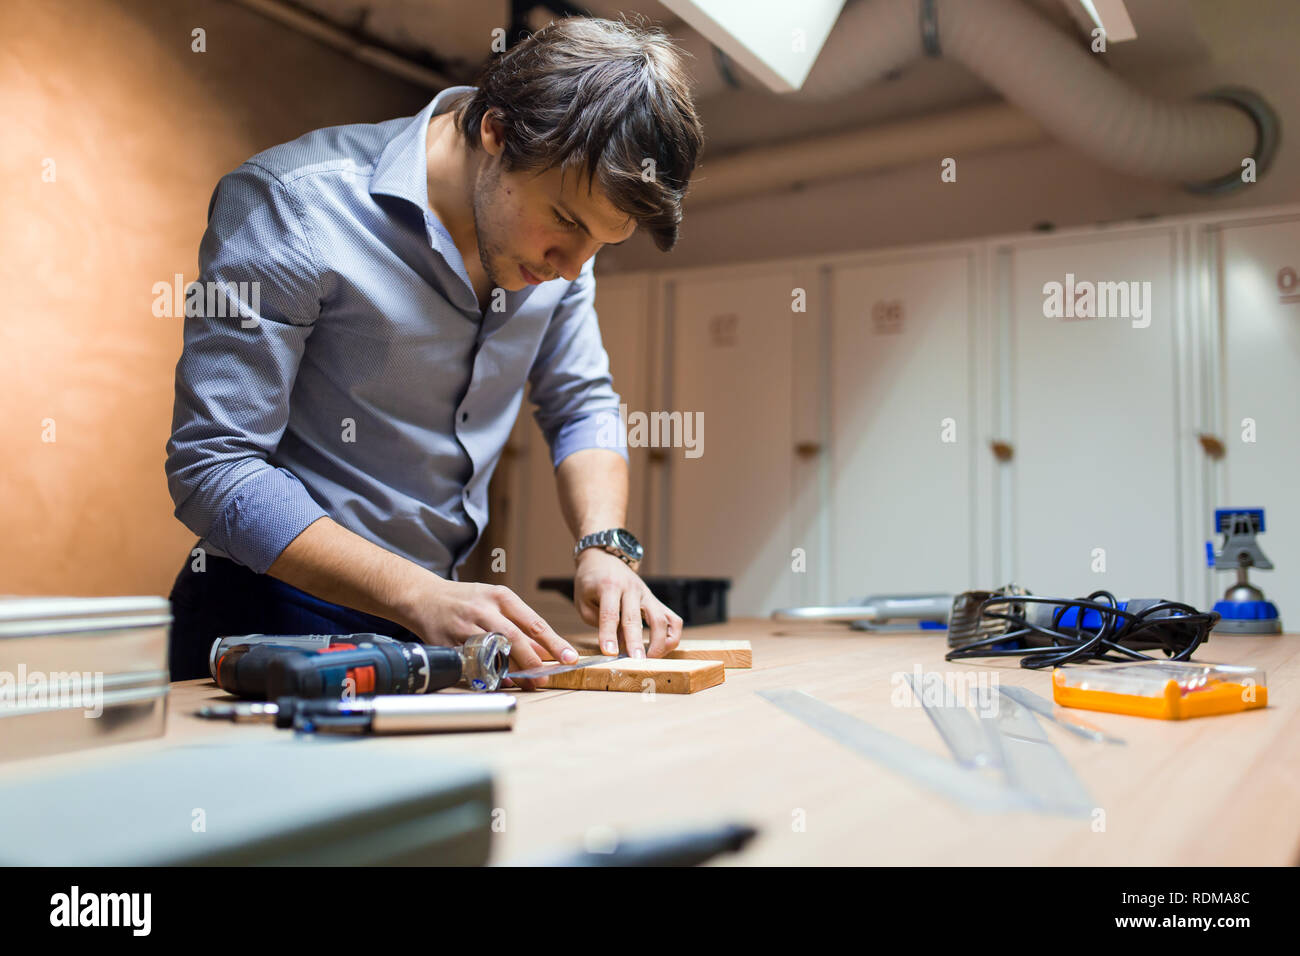 Handyman working with wood Stock Photo